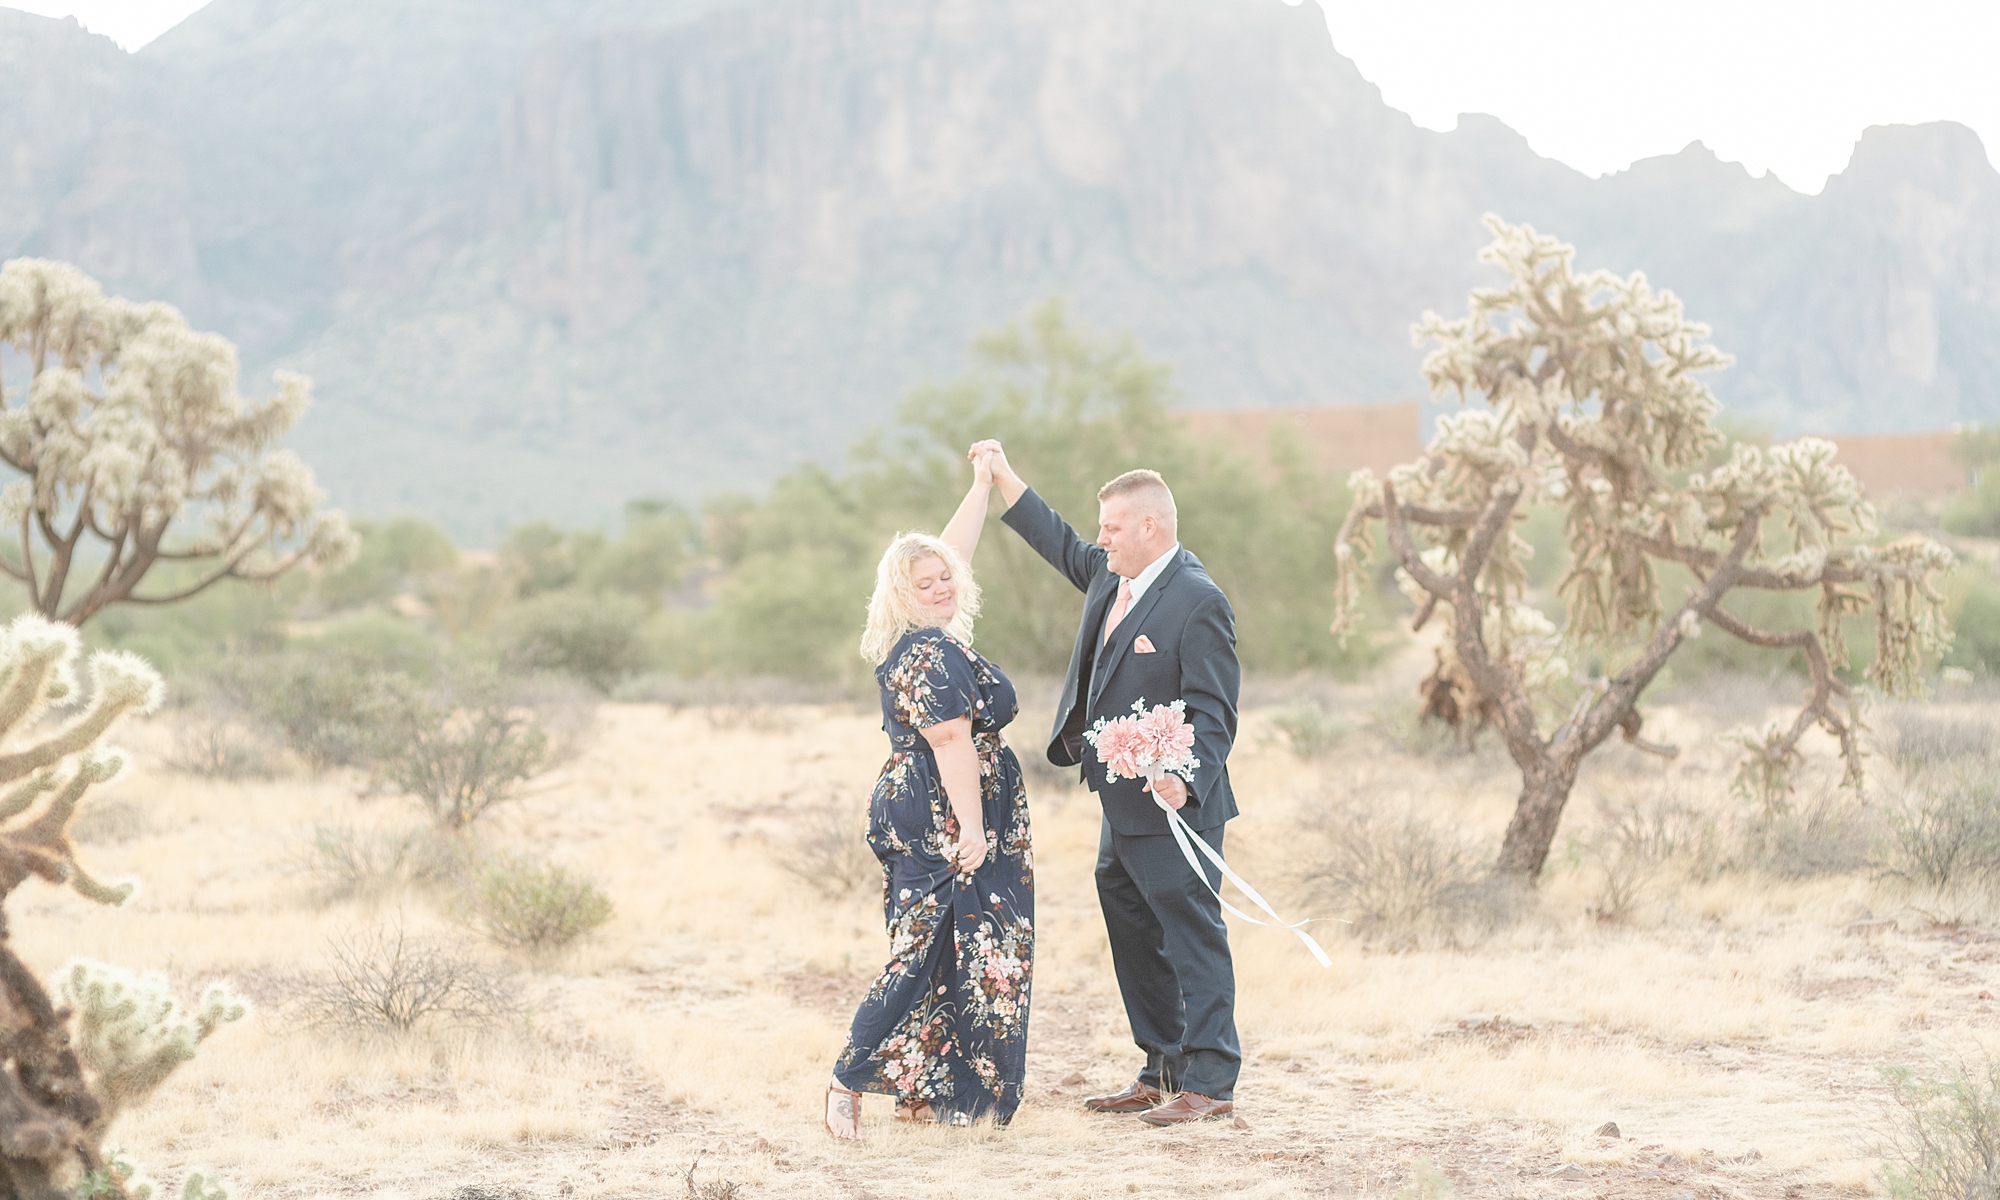 Arizona Sunrise Engagement Session At The Paseo by Destination Wedding Photographer Dolly DeLong Photography